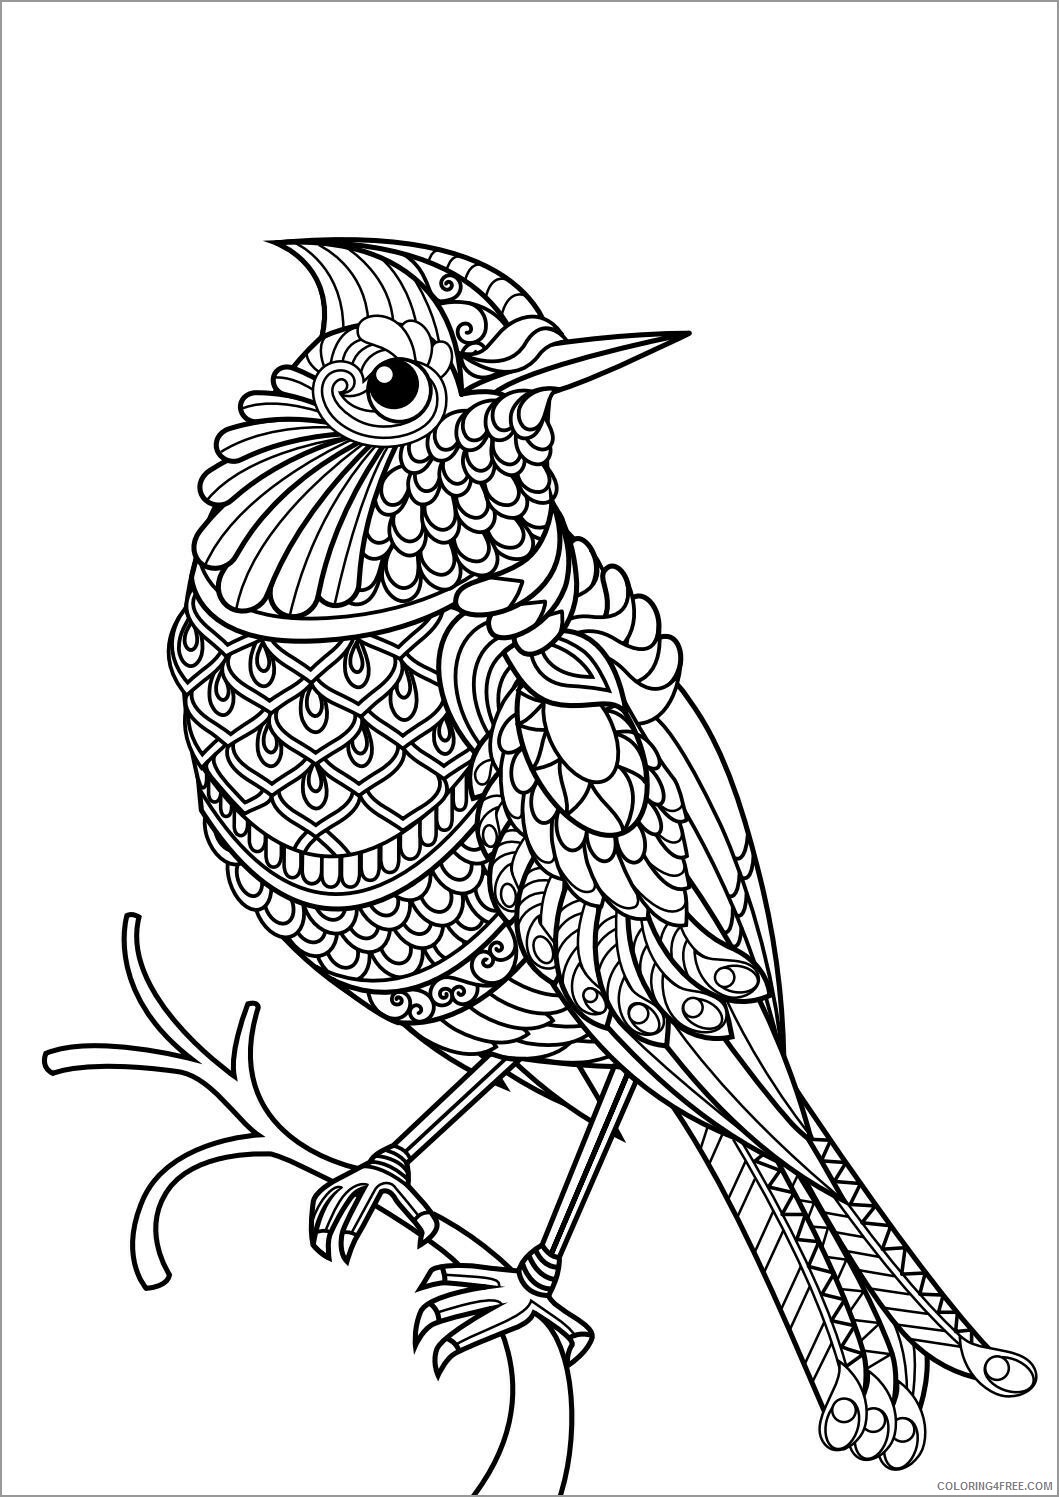 Mandala Coloring Pages Adult Animal Mandala Bird Printable 2020 514 Coloring4free Coloring4free Com